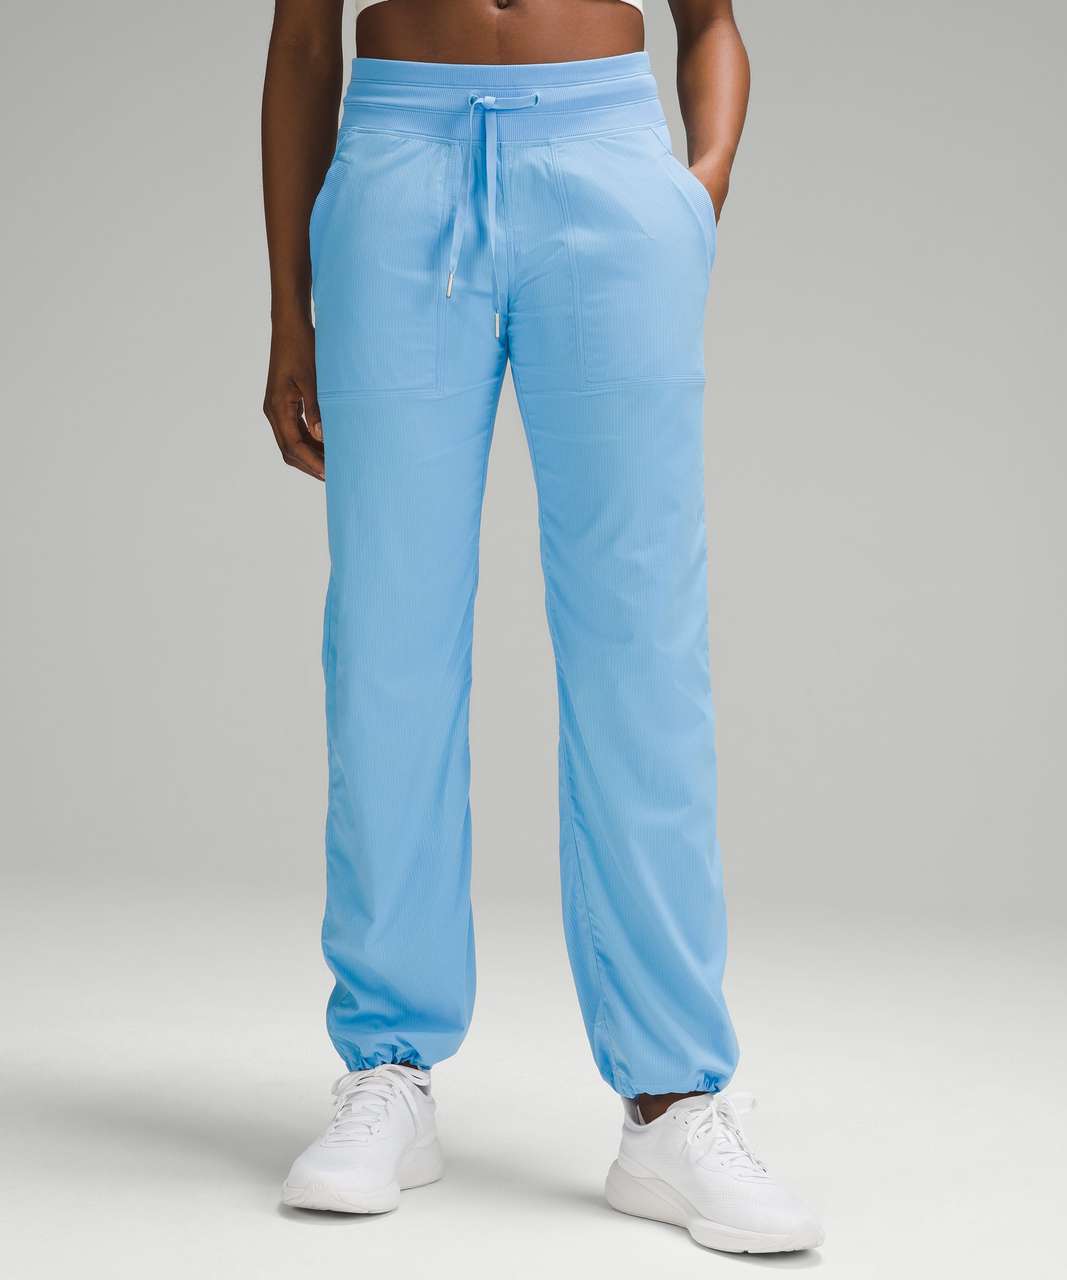 Lululemon Athletica Blue Active Pants Size 0 - 52% off